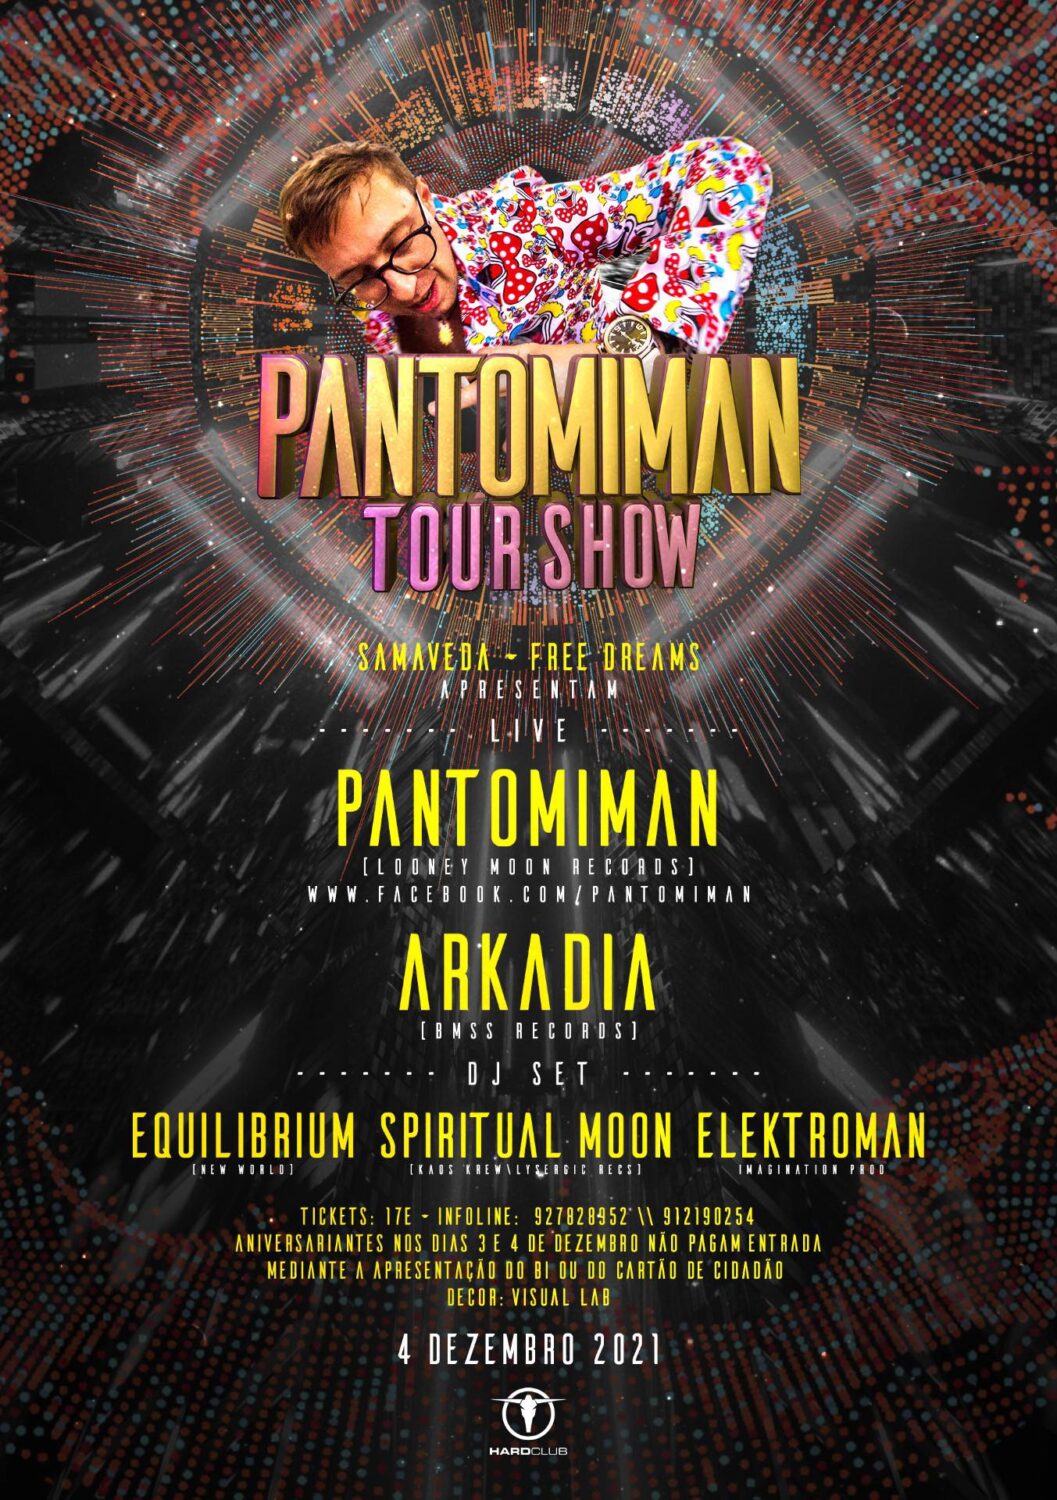 Samaveda & Free Dreams - Pantomiman Tour Show